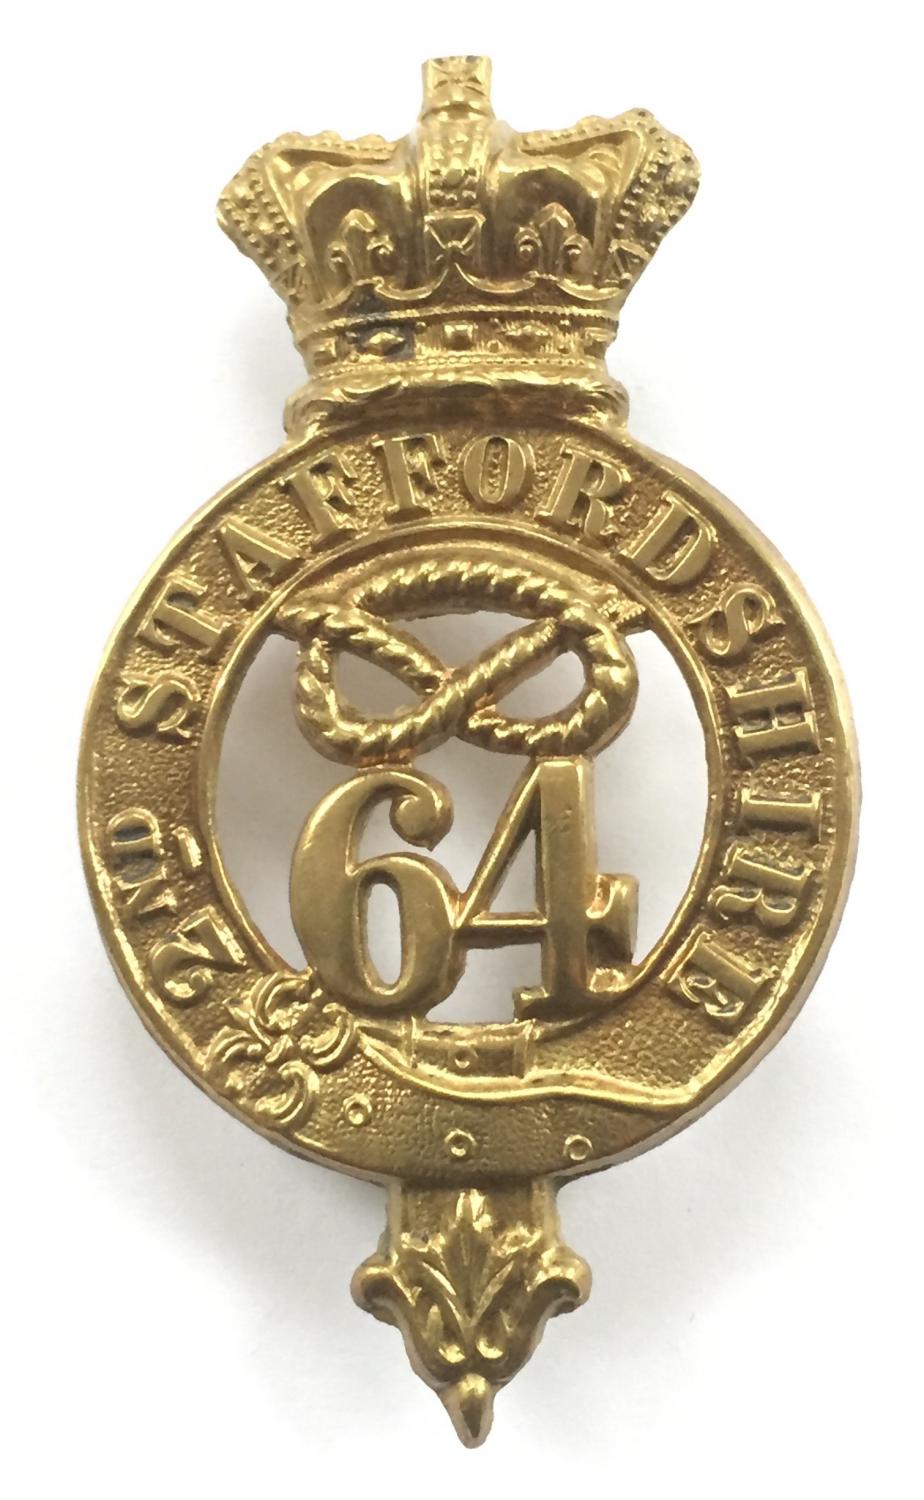 64th (2nd Staffs) Regiment of Foot Victorian glengarry badge 1874-81